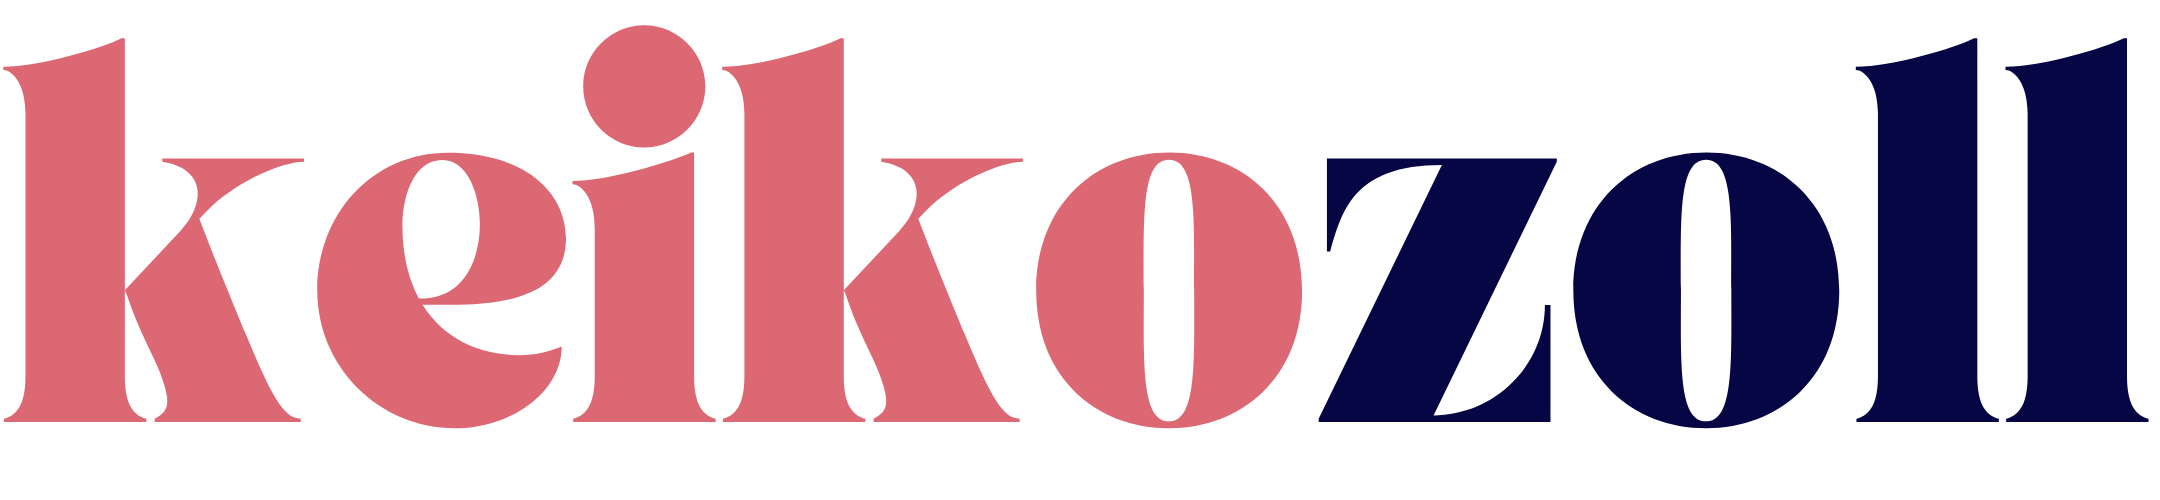 Keiko Zoll